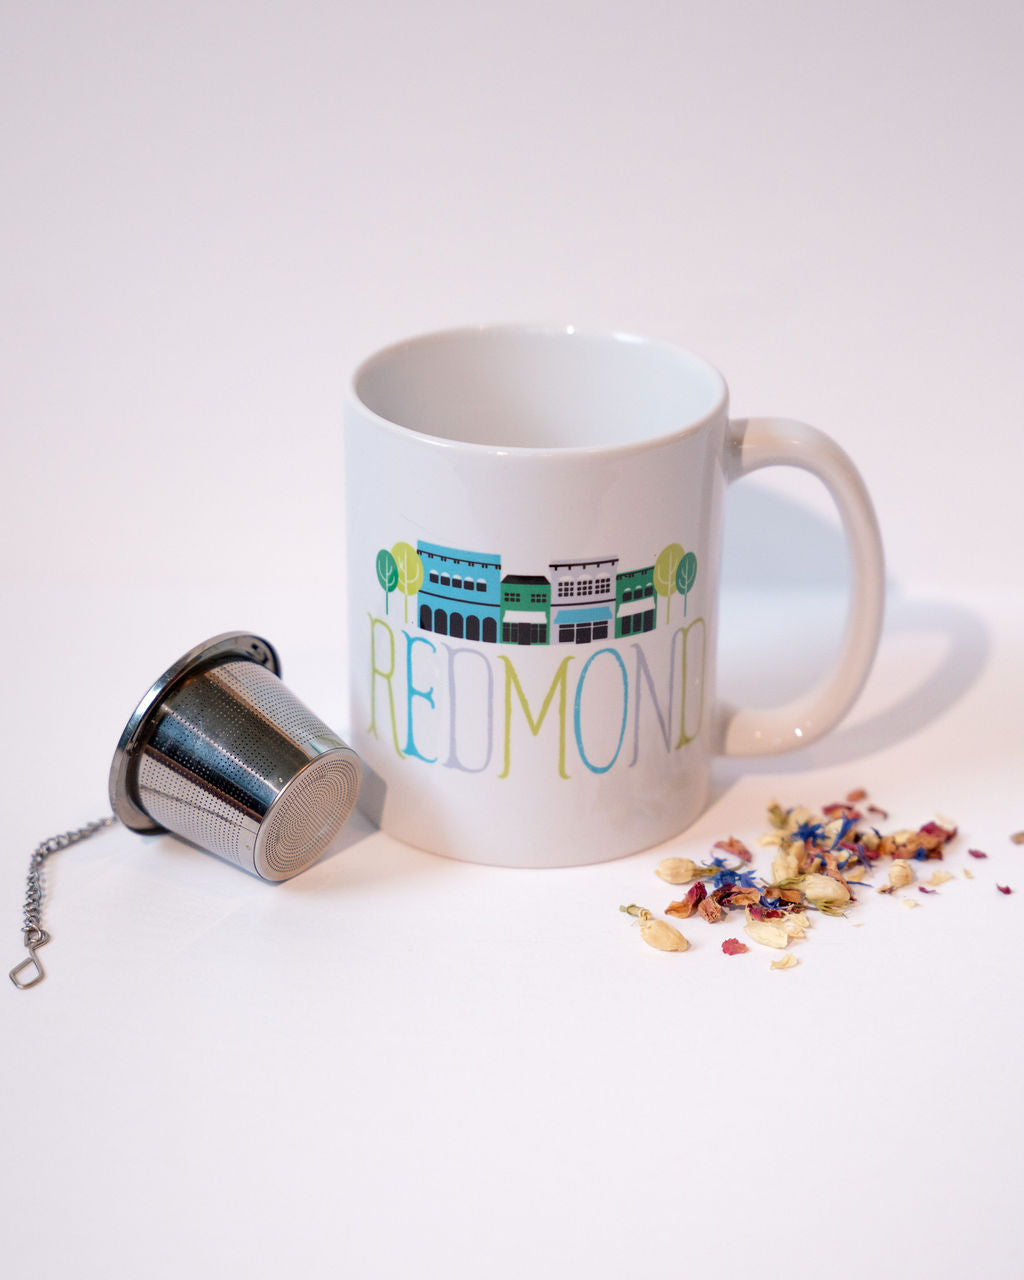 Redmond ceramic mug - town